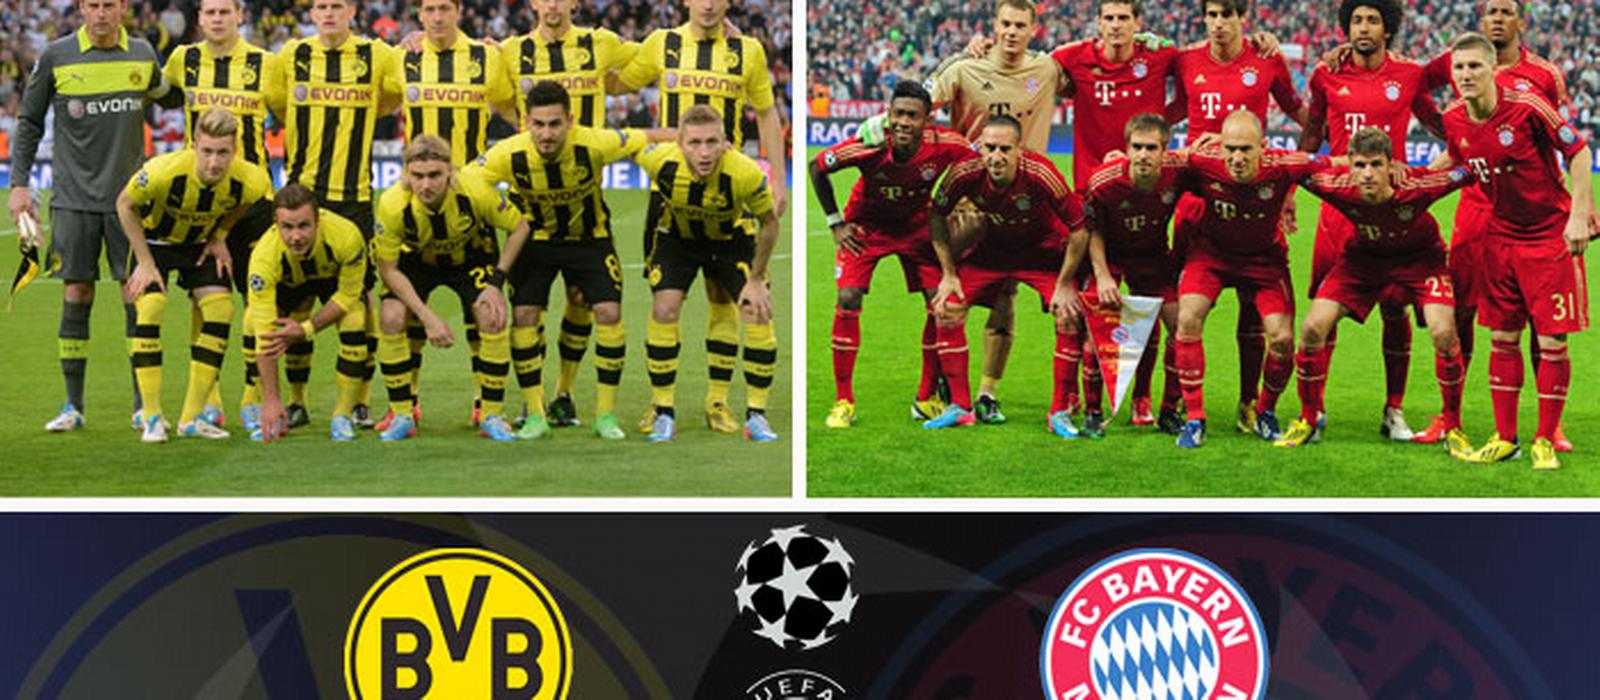 Destaques da 2.Bundesliga - Parte 1 - Footure - Futebol e Cultura